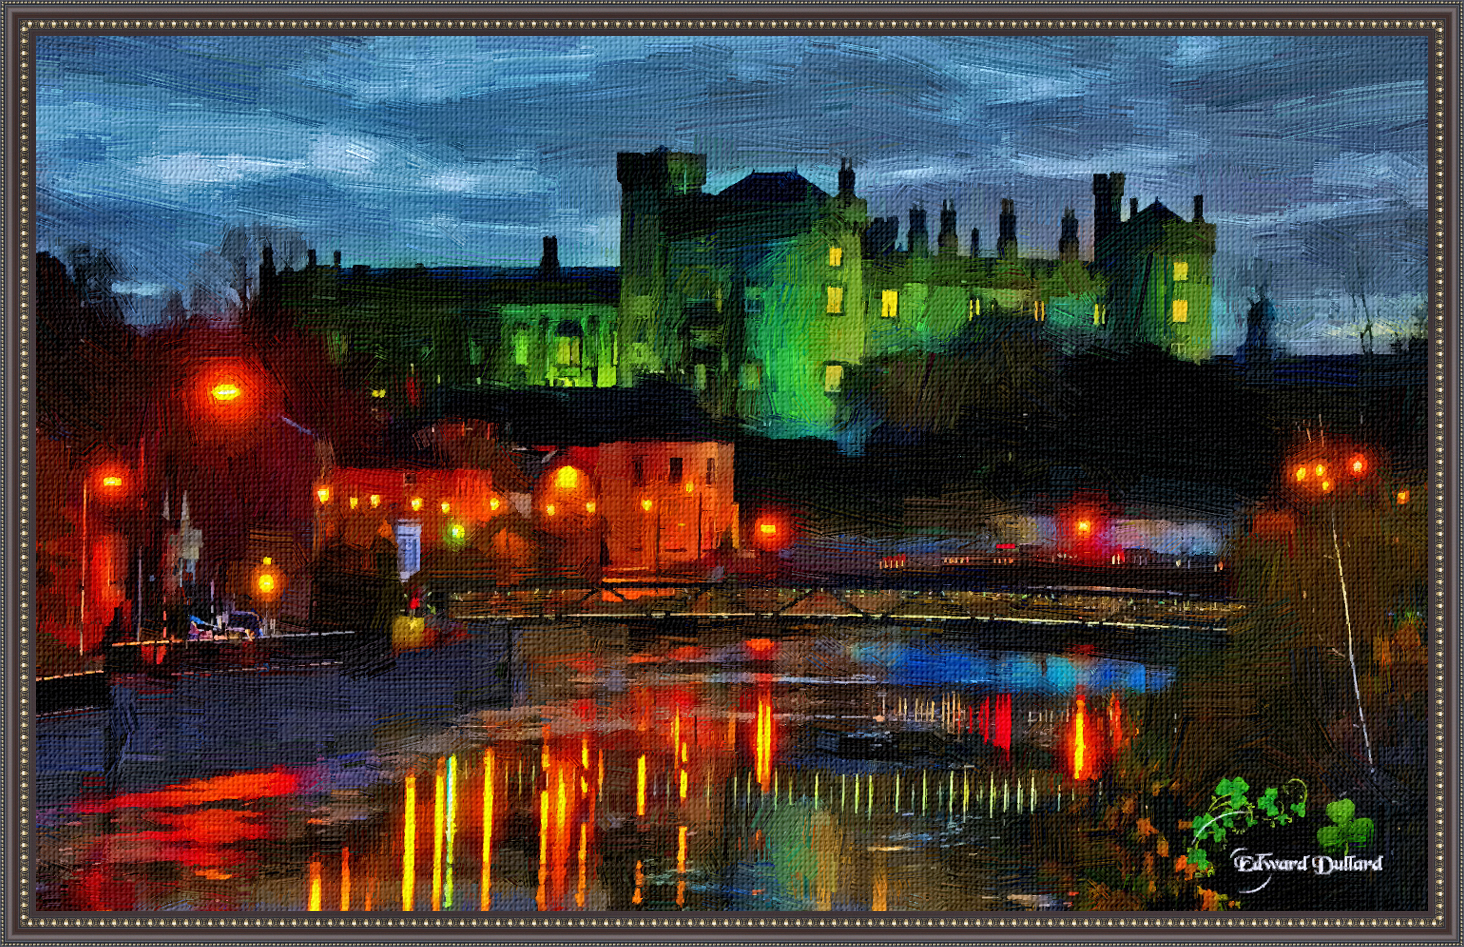 Kilkenny castle....